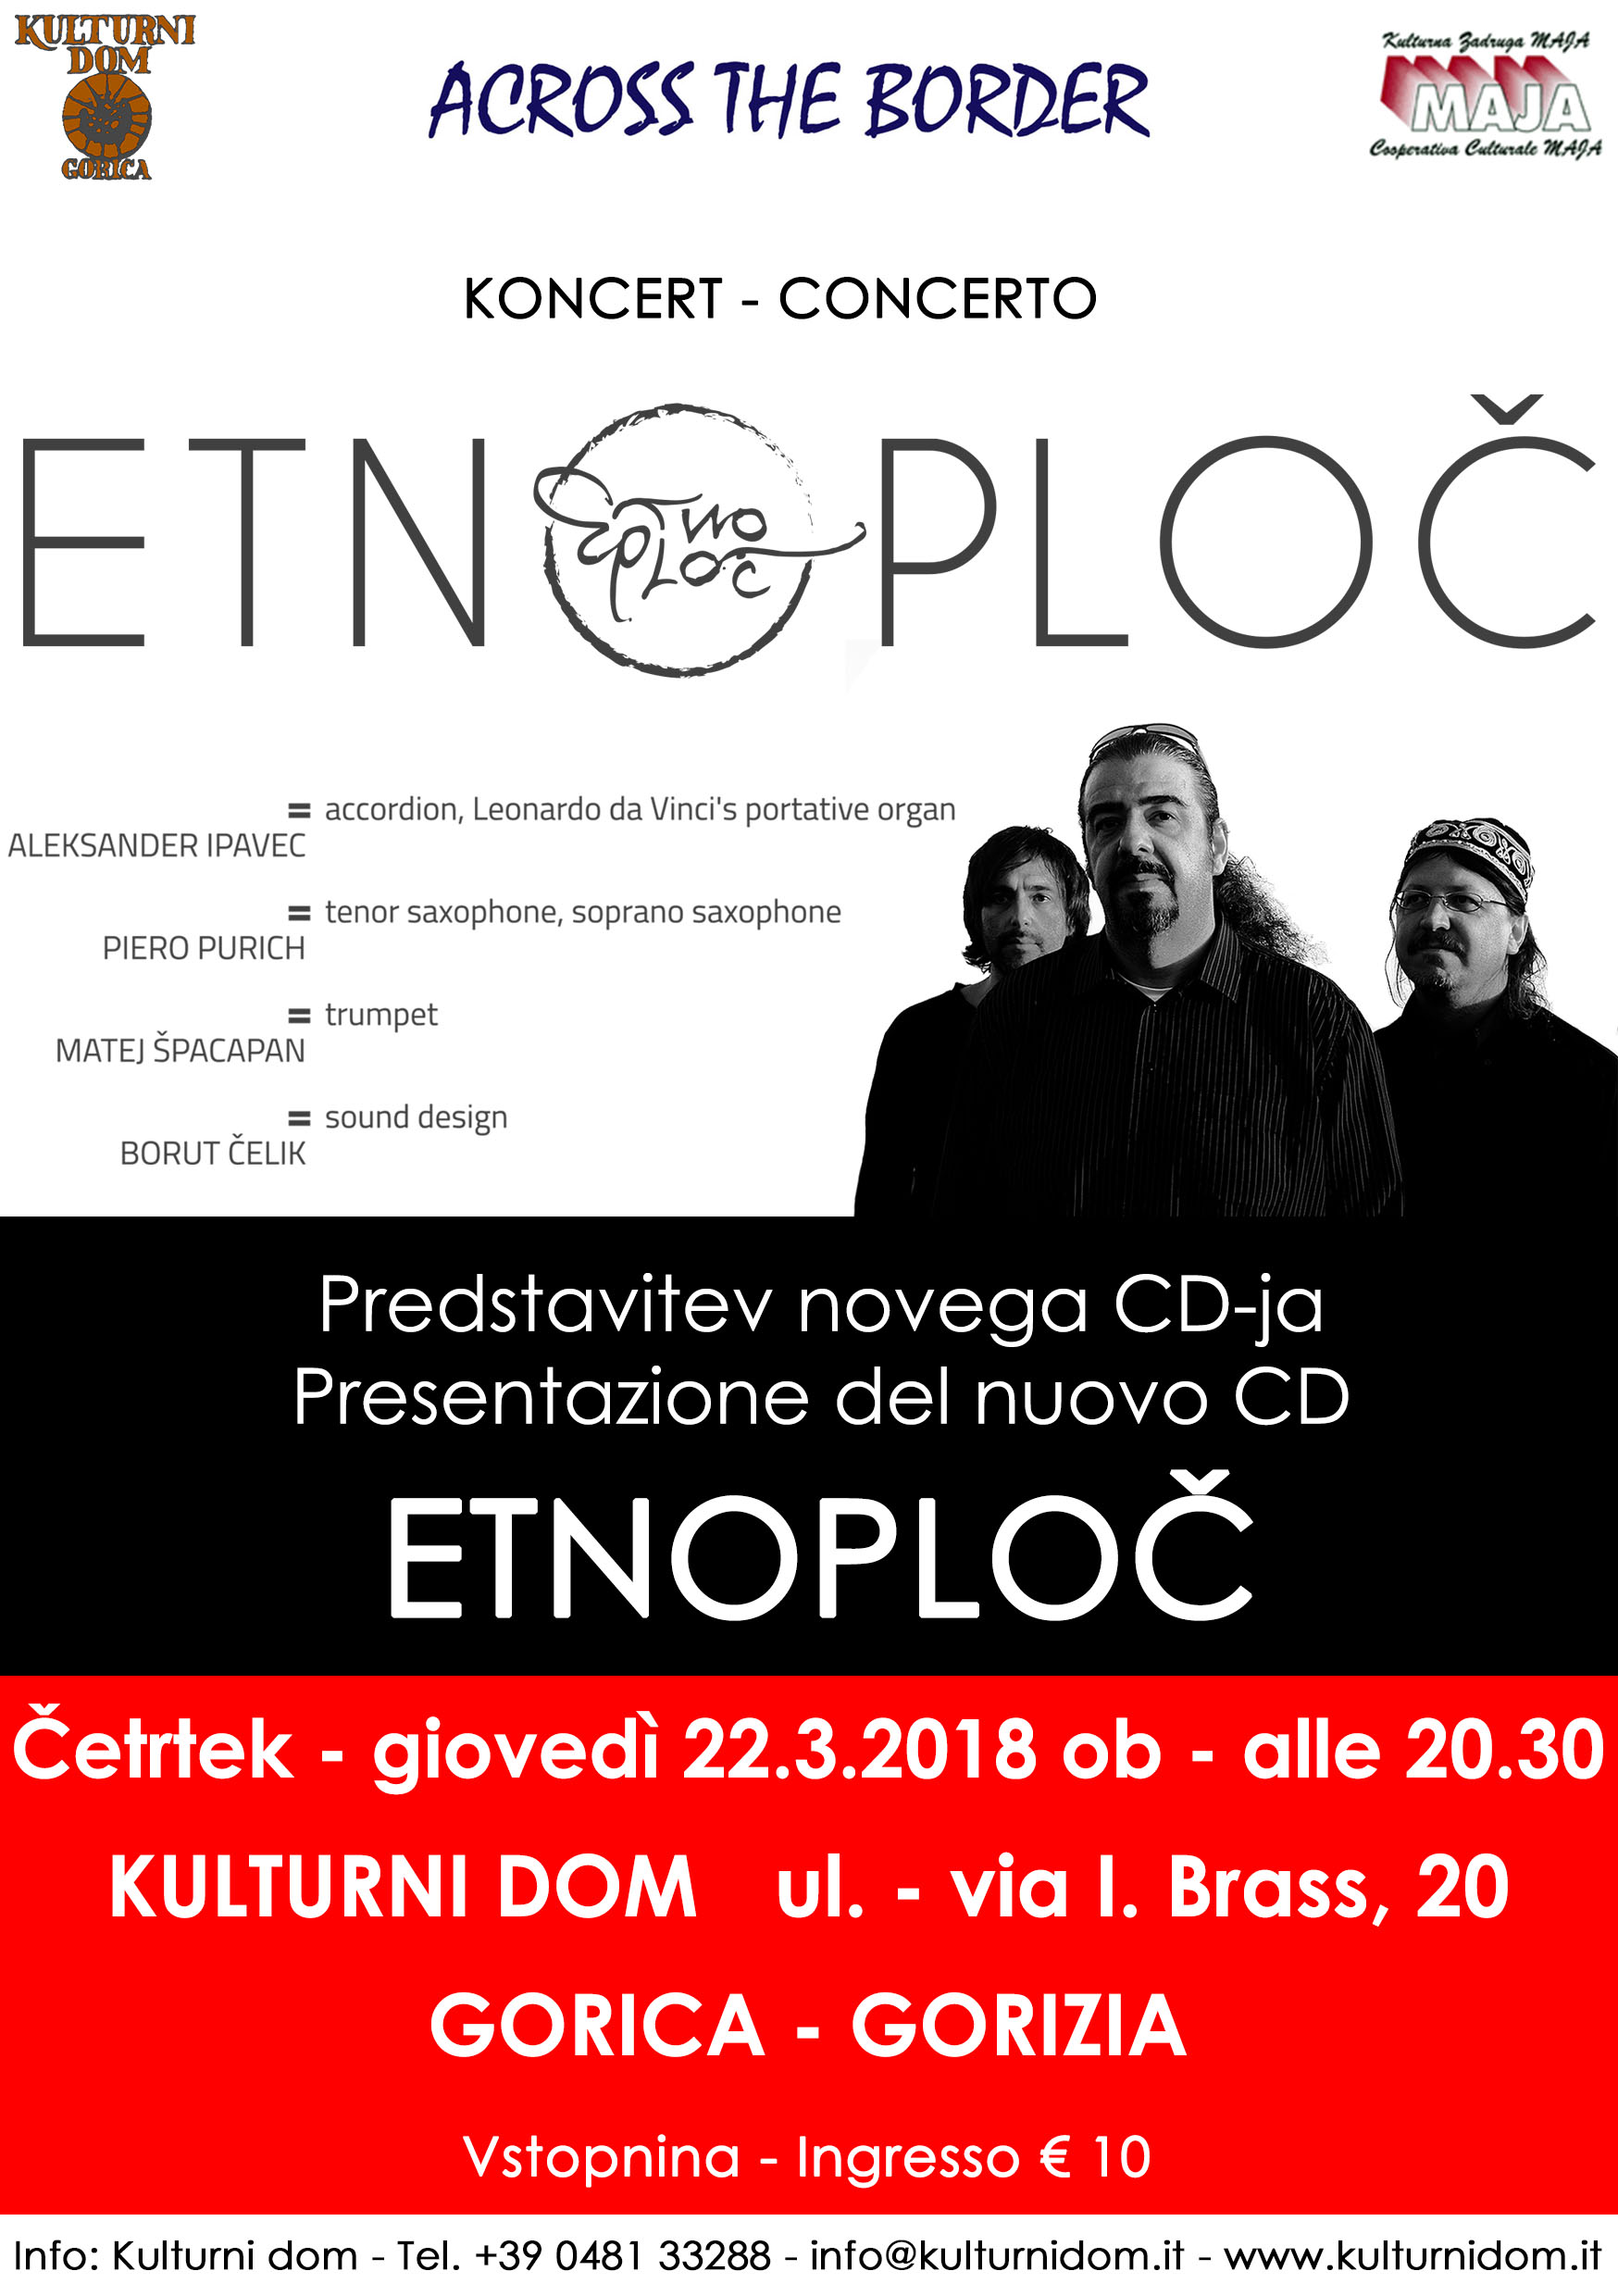 Etnoploč Trio in concert